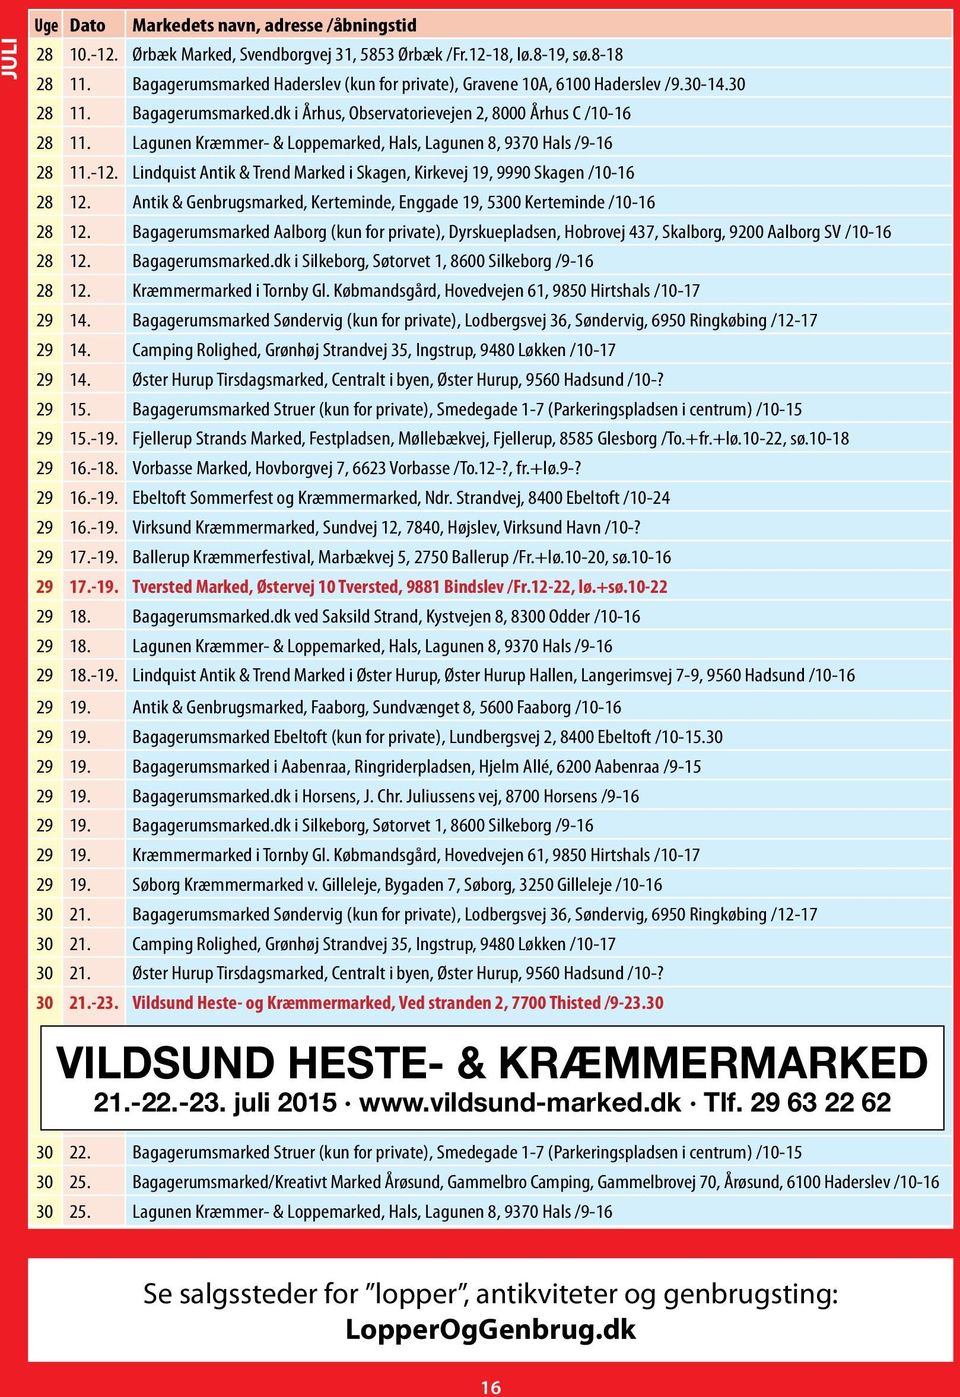 Lindquist Antik & Trend Marked i Skagen, Kirkevej 19, 9990 Skagen /10-16 28 12. Antik & Genbrugsmarked, Kerteminde, Enggade 19, 5300 Kerteminde /10-16 28 12.